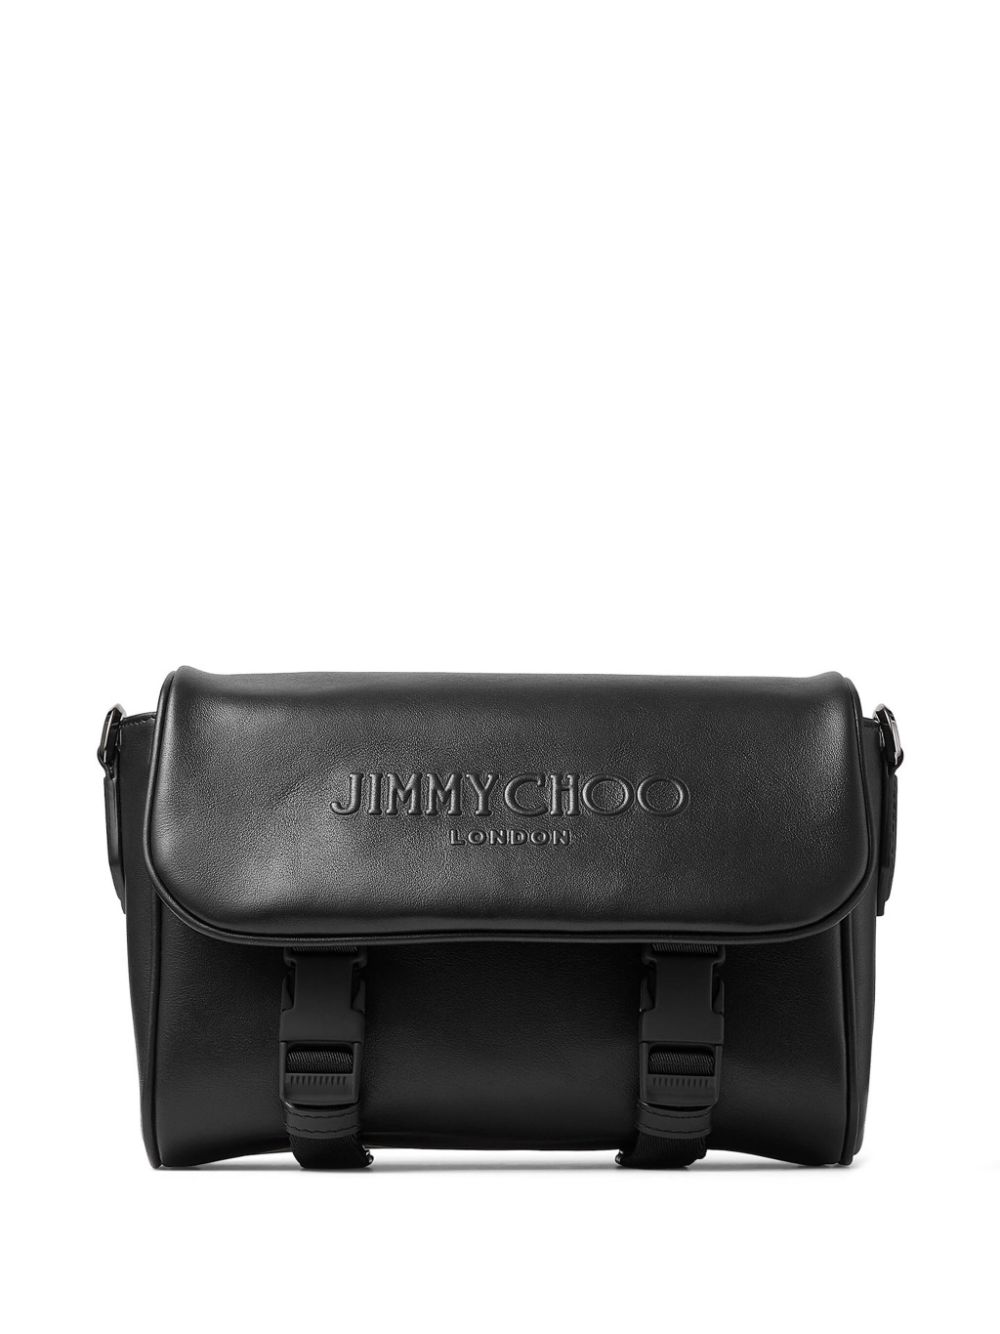 Jimmy Choo Eli Leather Messenger Bag In Metallic